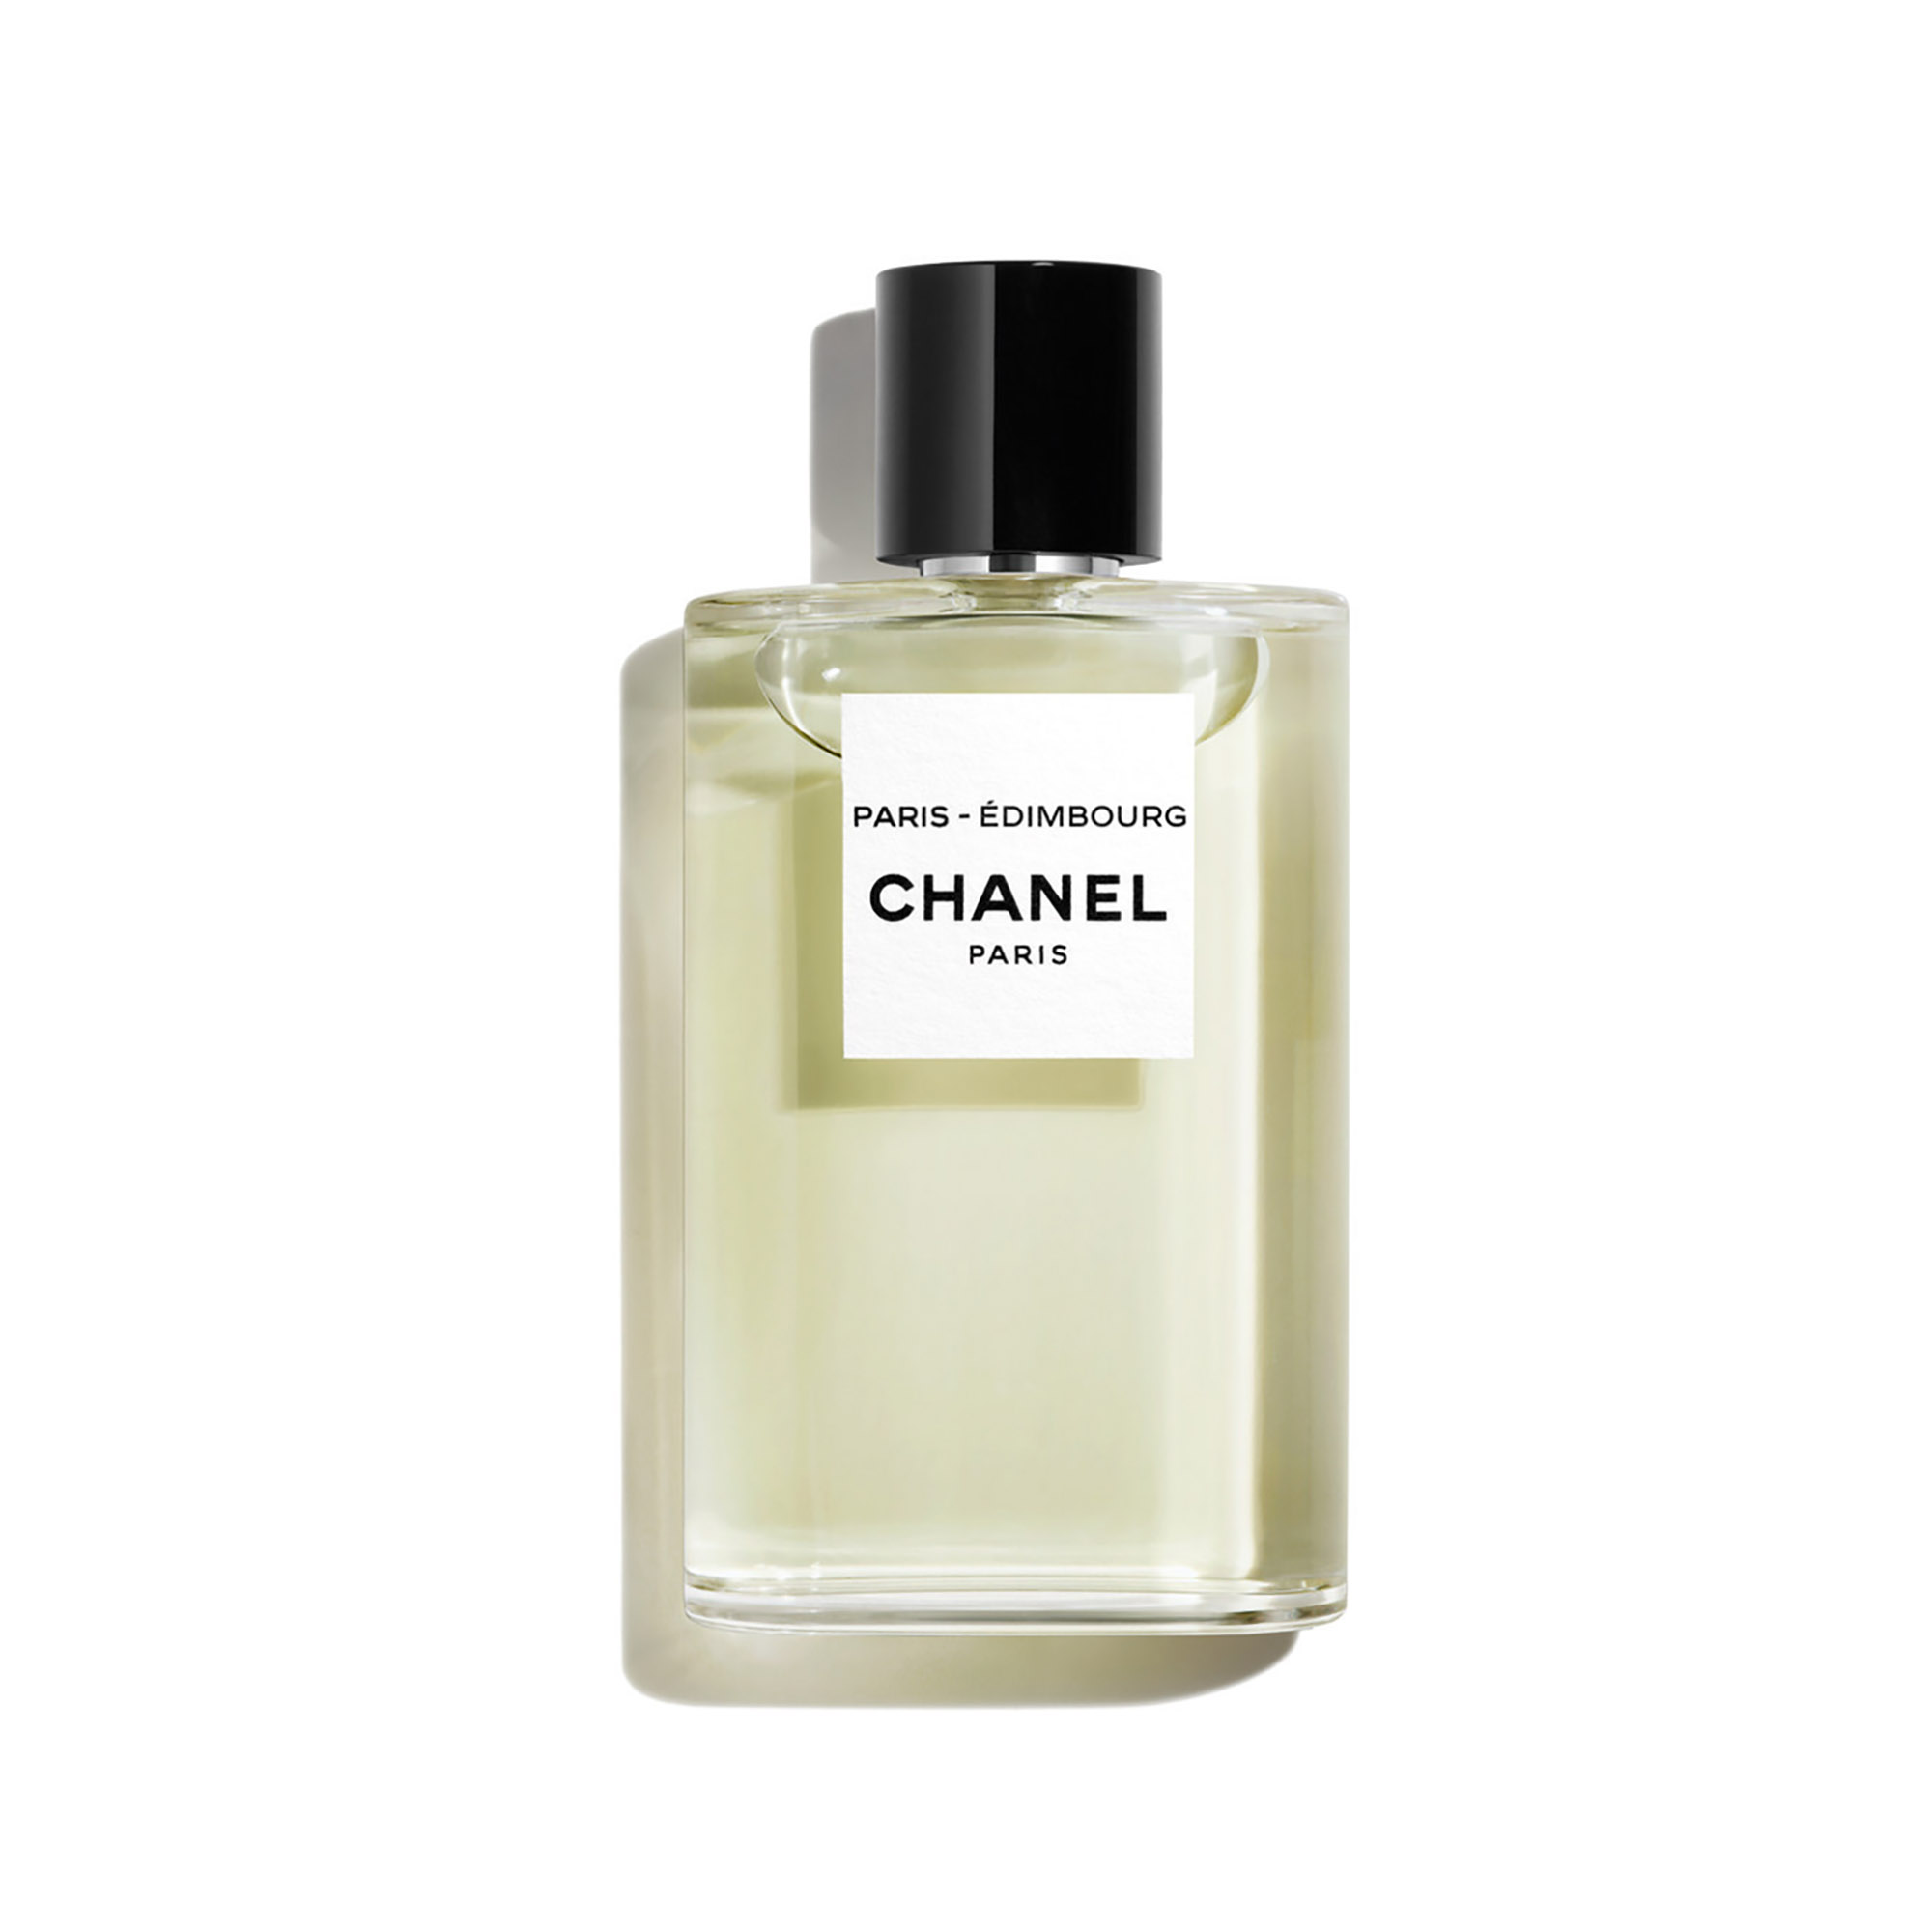 chanel perfume chance